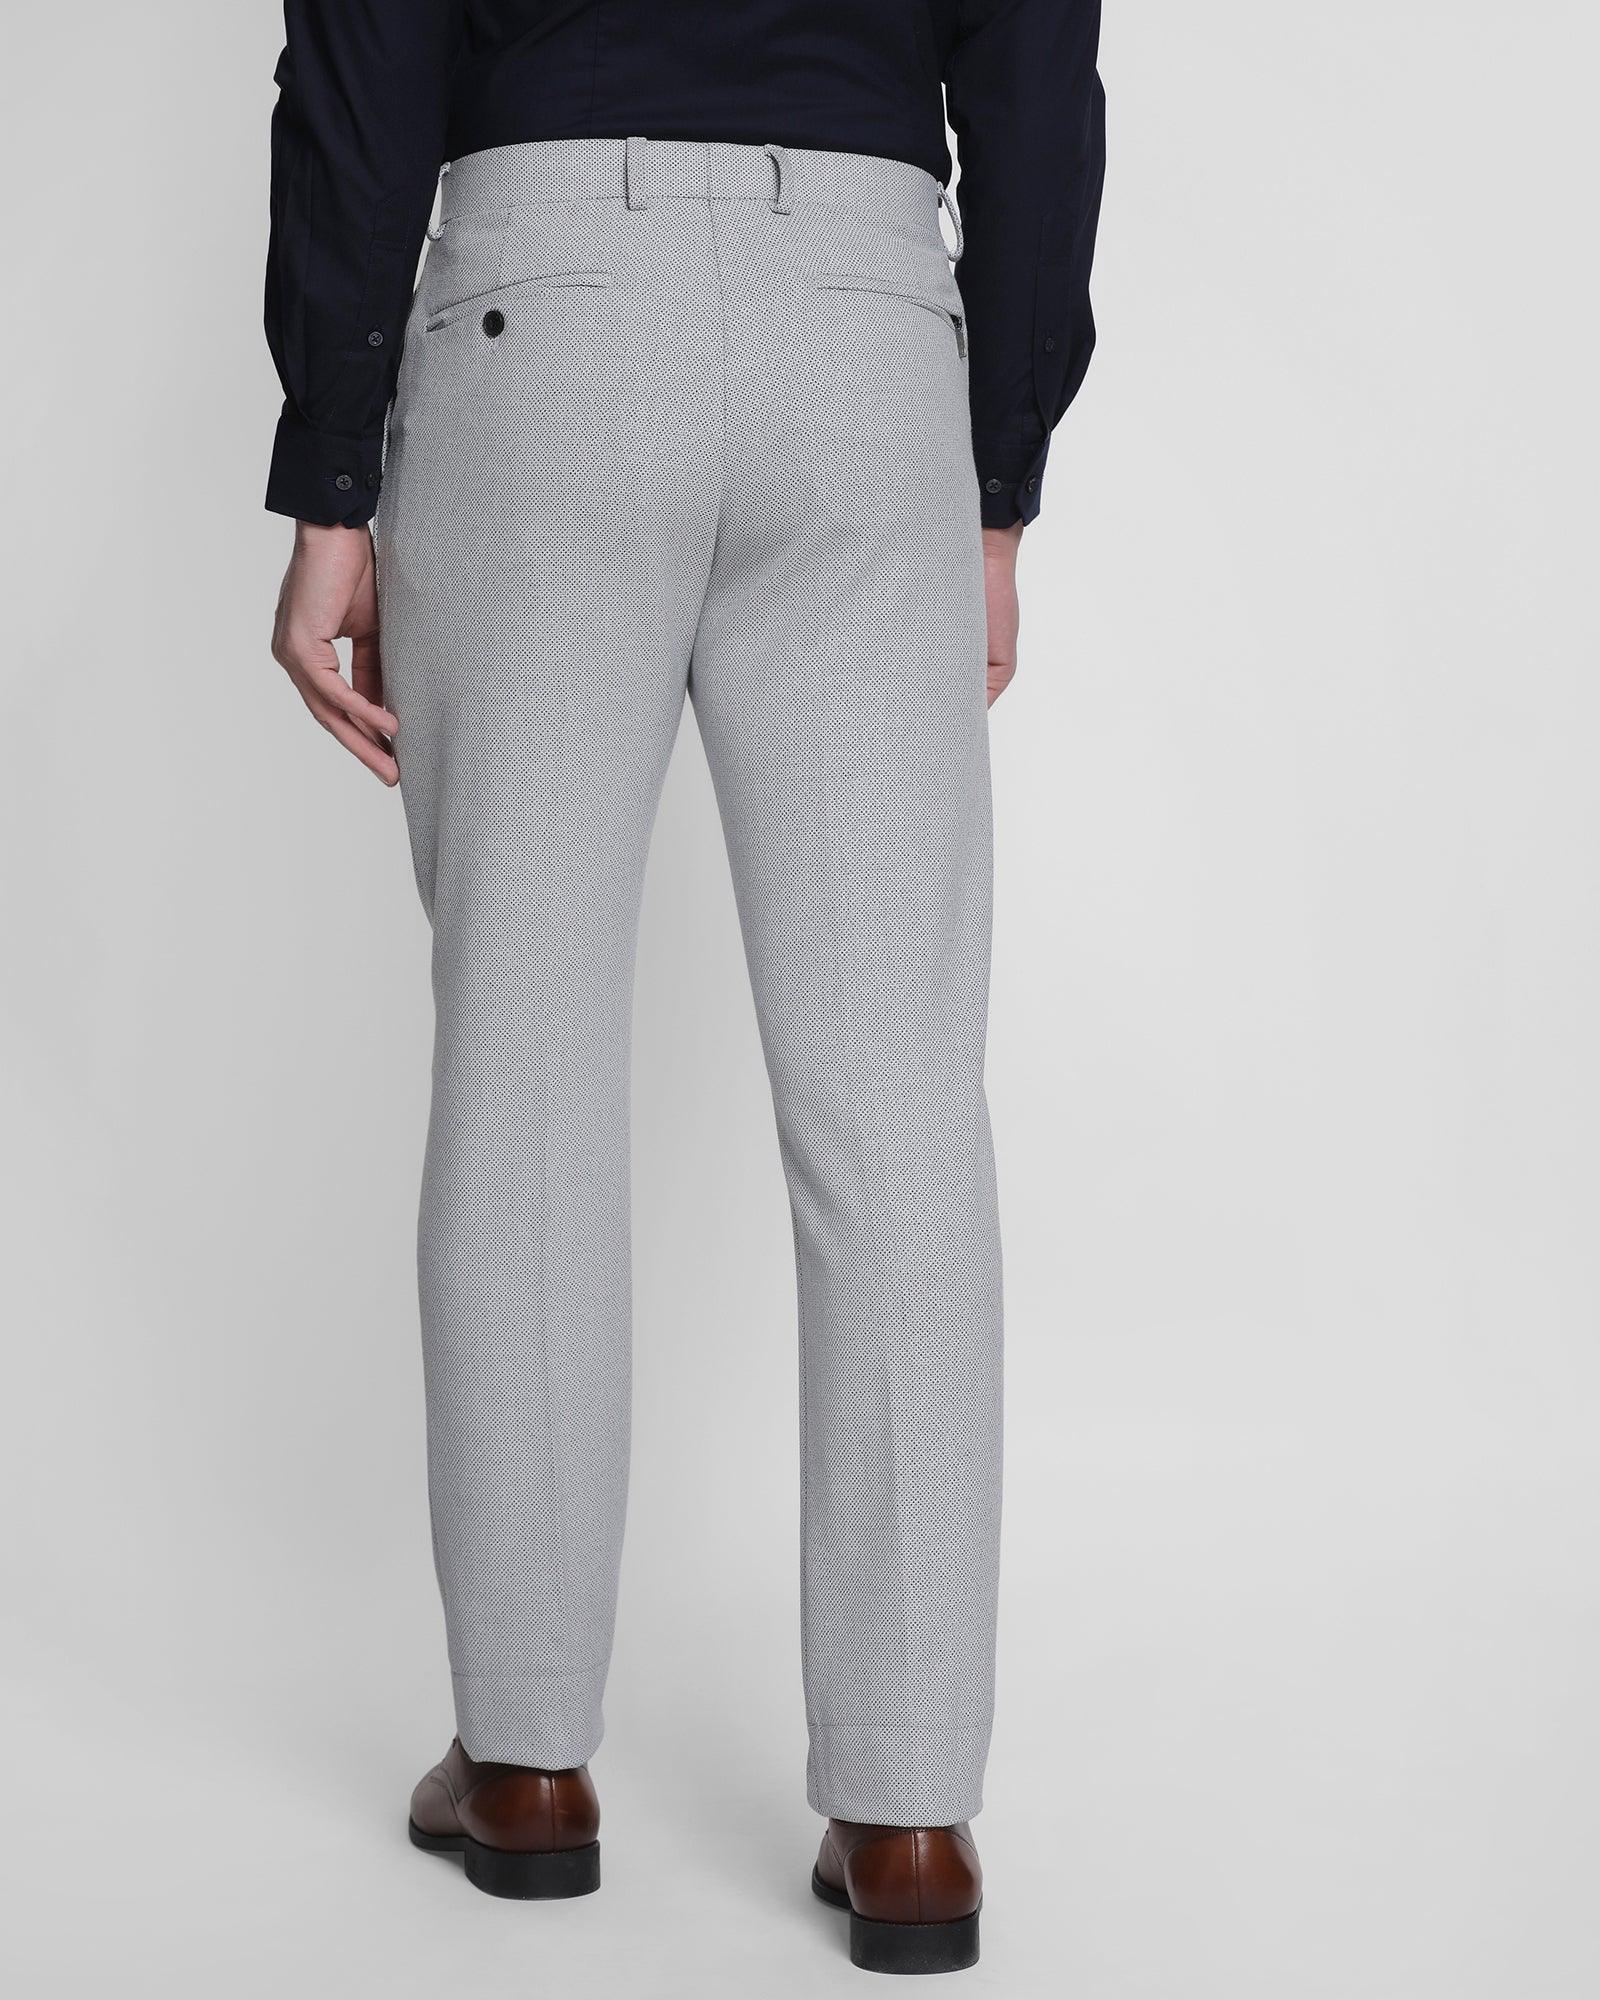 Comfort Arise Formal Blue Textured Trouser - Bentor